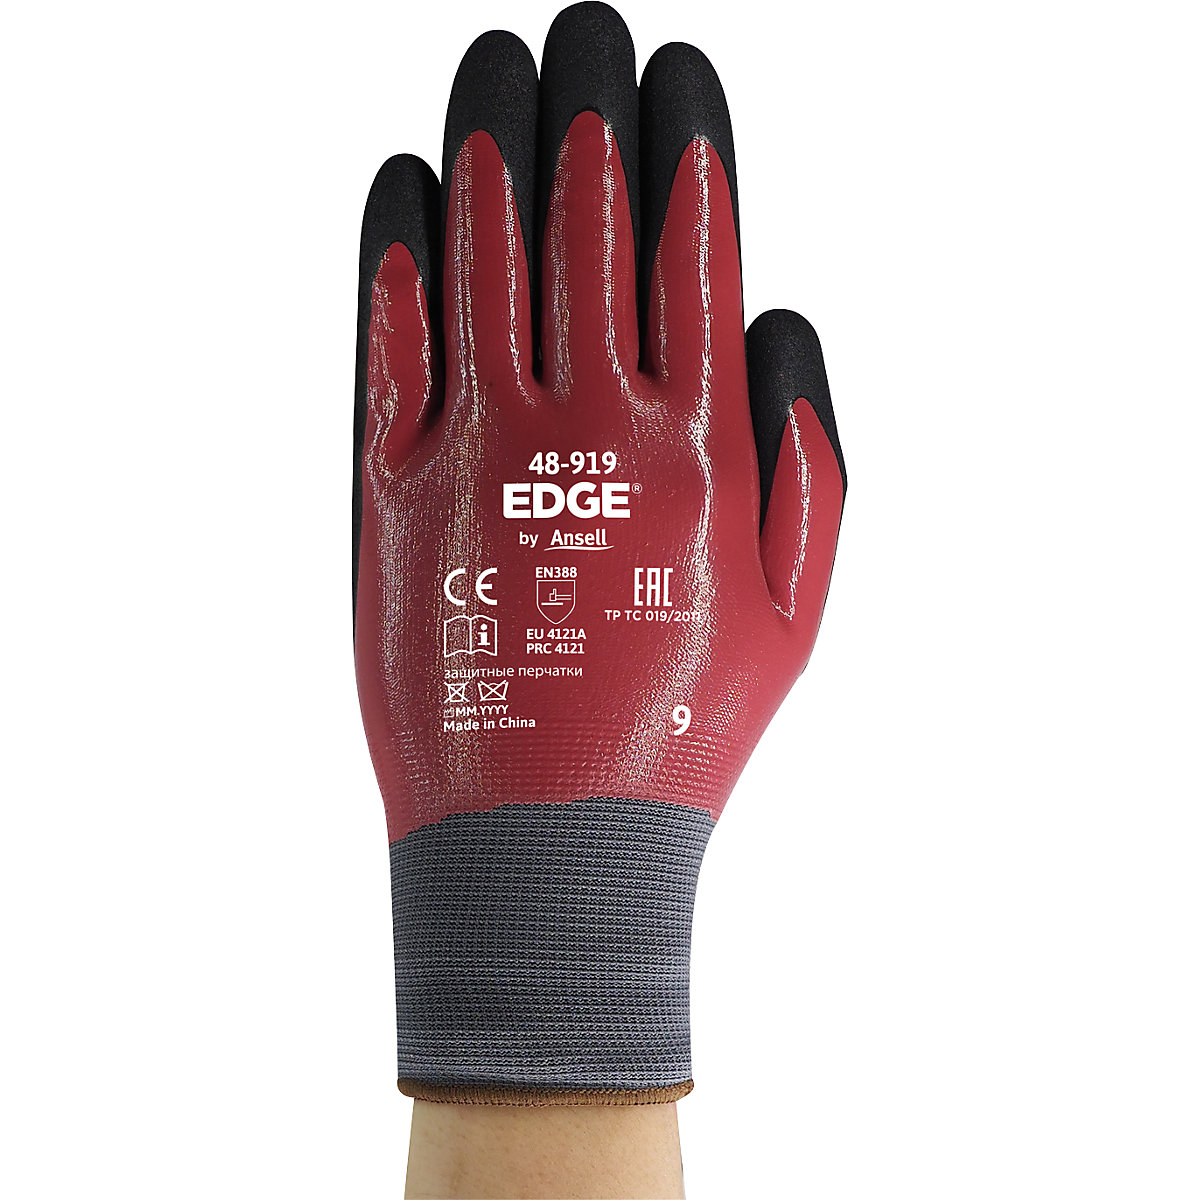 Delovne rokavice EDGE® 48-919 – Ansell